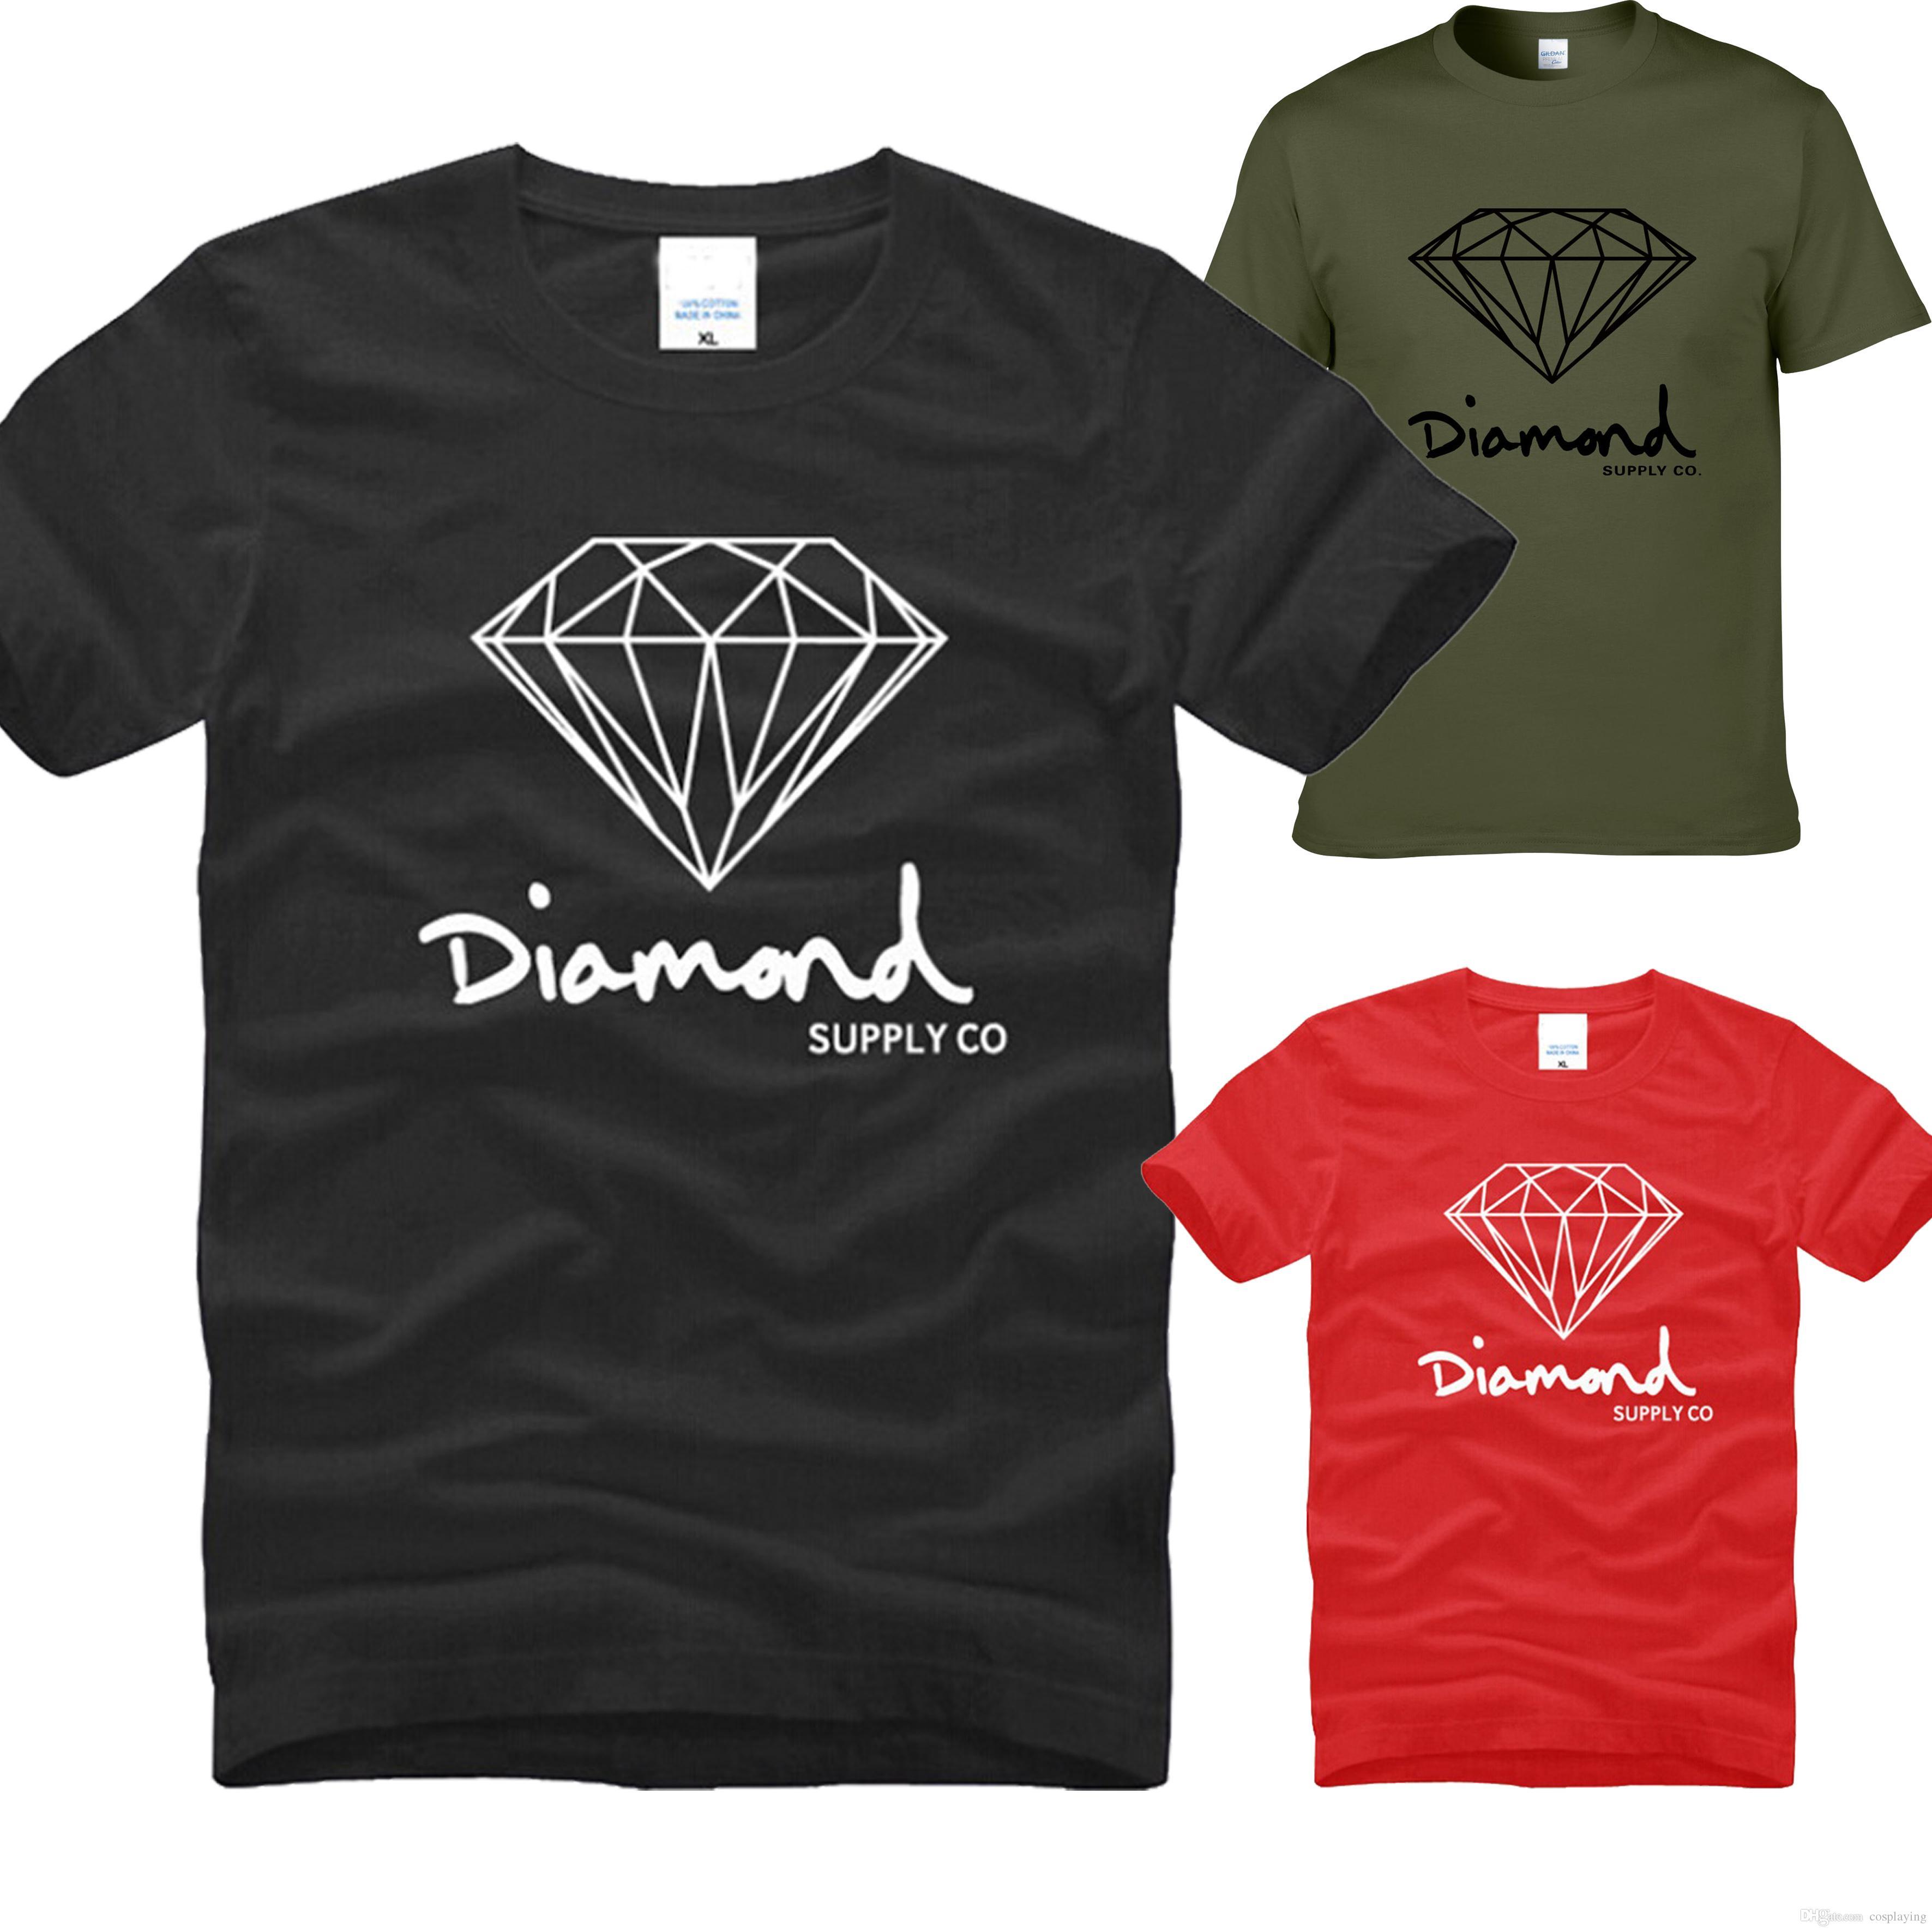 Diamond Clothing Brand Logo - Diamond Supply Co Printed T Shirt Men'S Fashion Brand Design Clothes ...